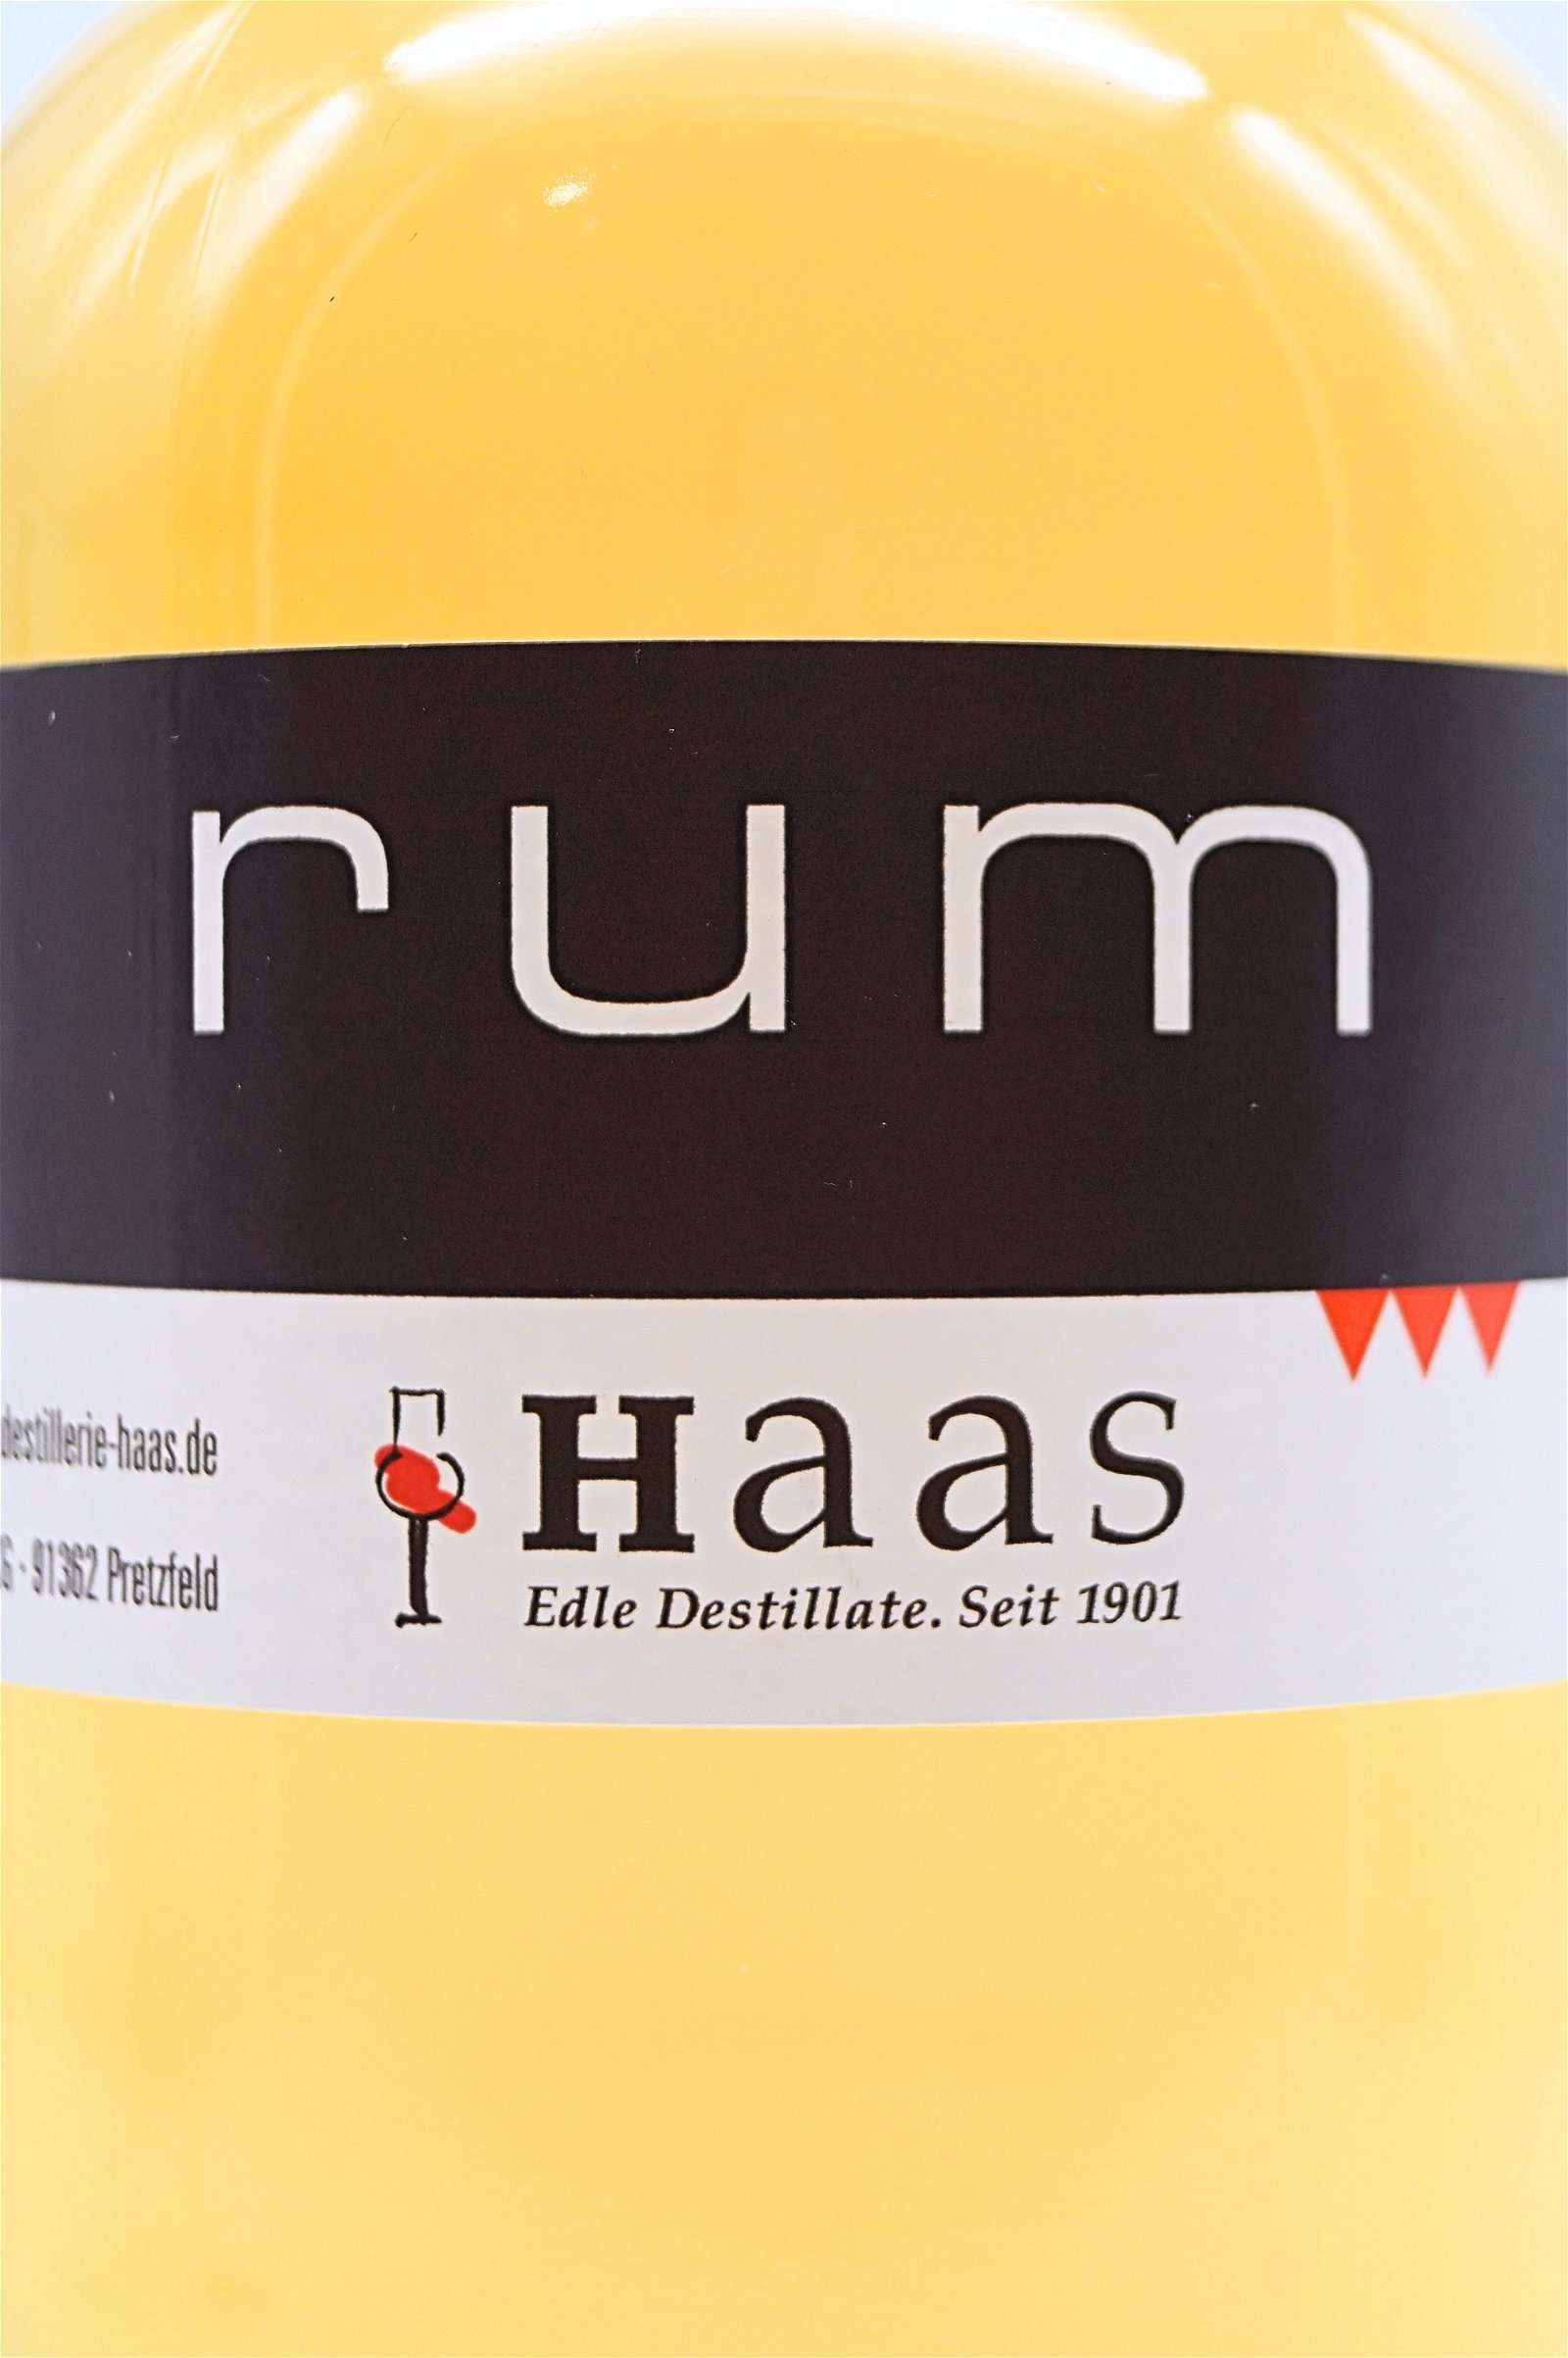 Edelbrennerei Haas Rum